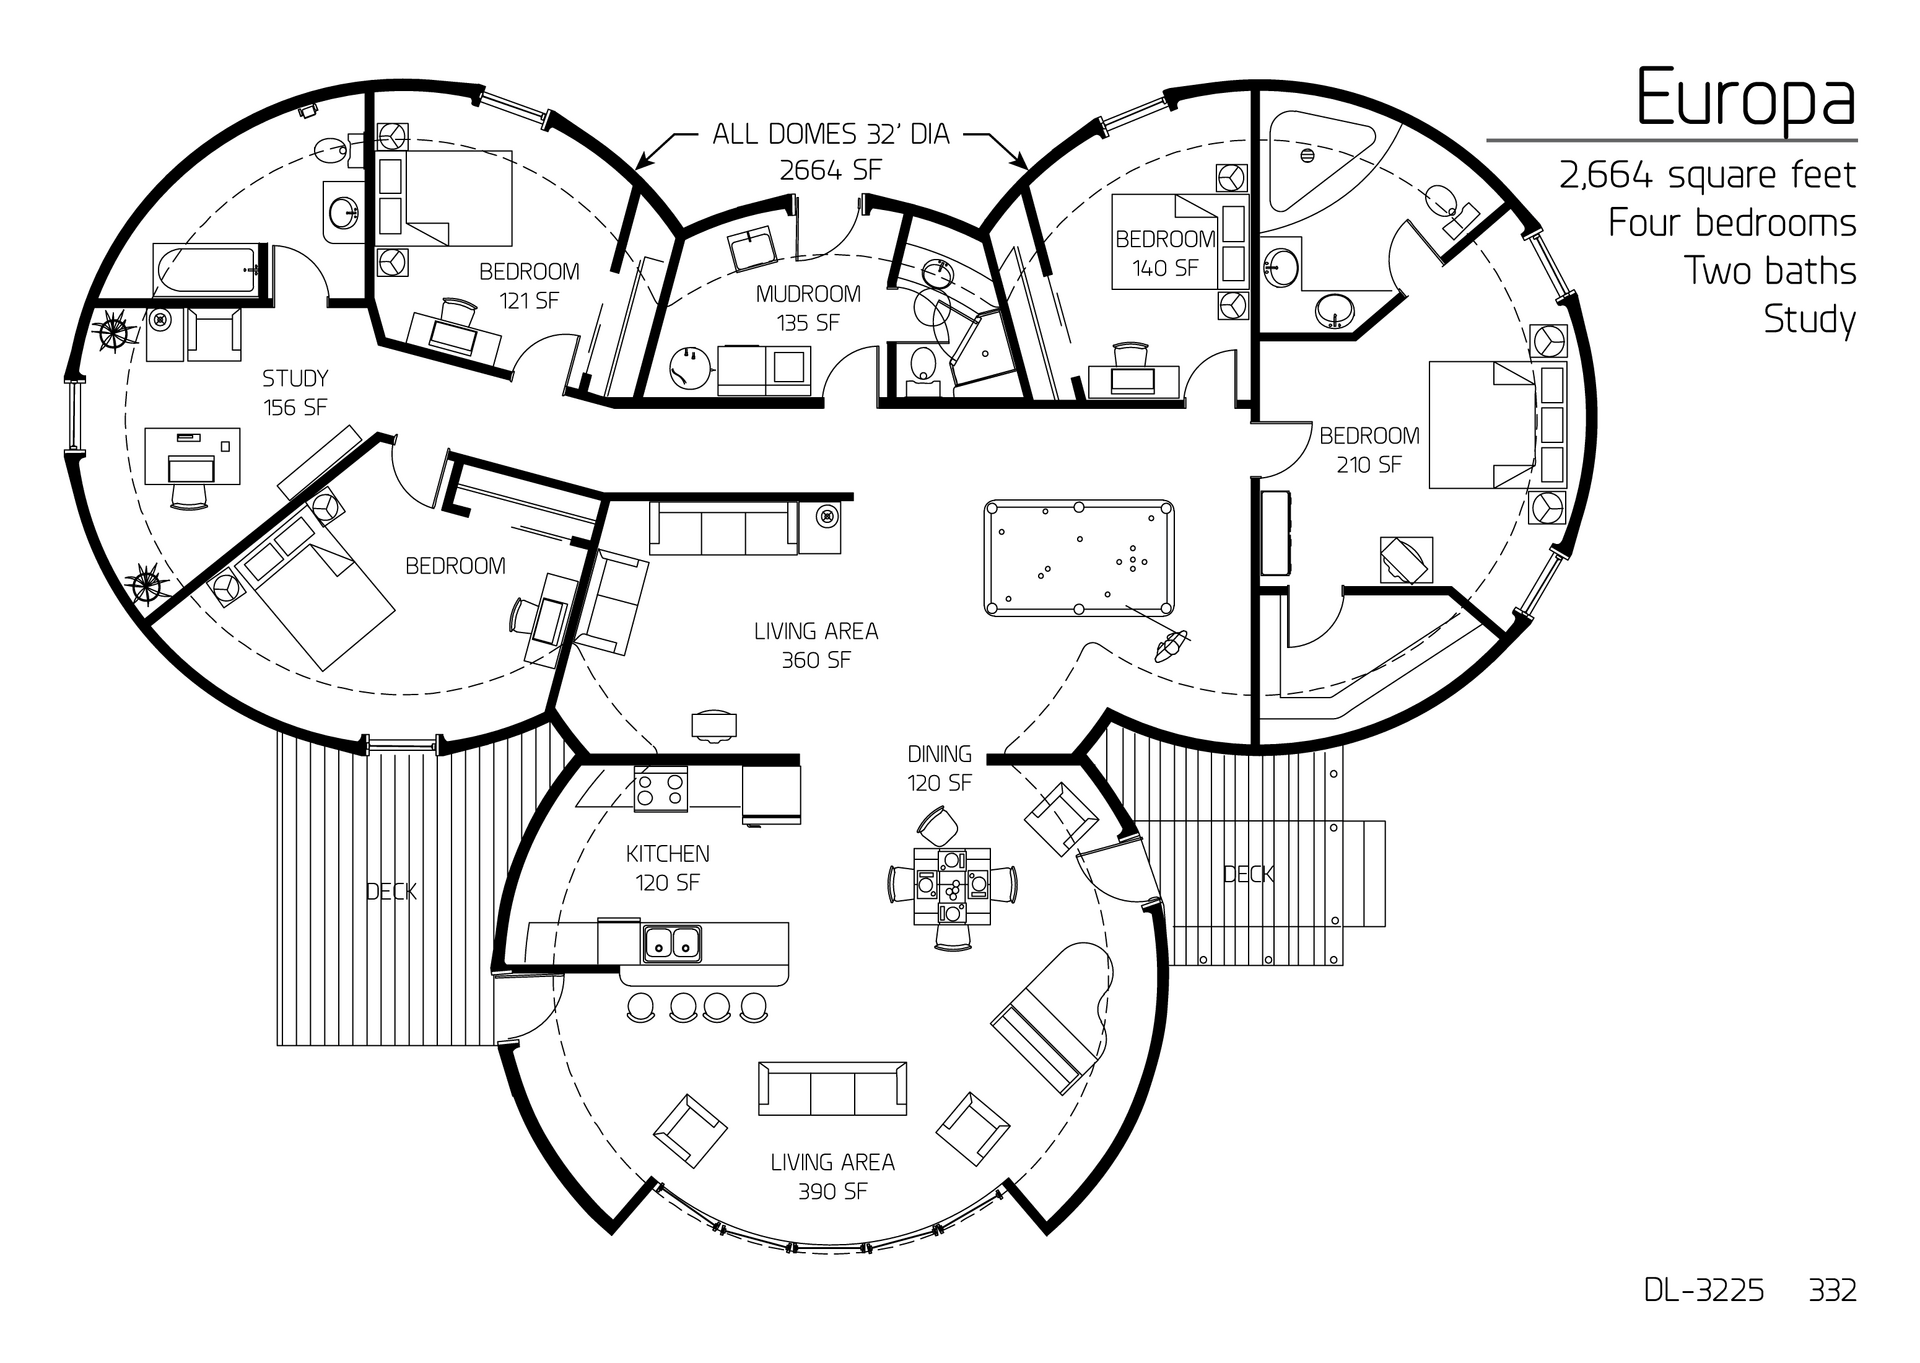 Europa: Four 32' Diameter Domes, 2,664 SF, Four-Bedroom, Three-Bath Floor Plan.